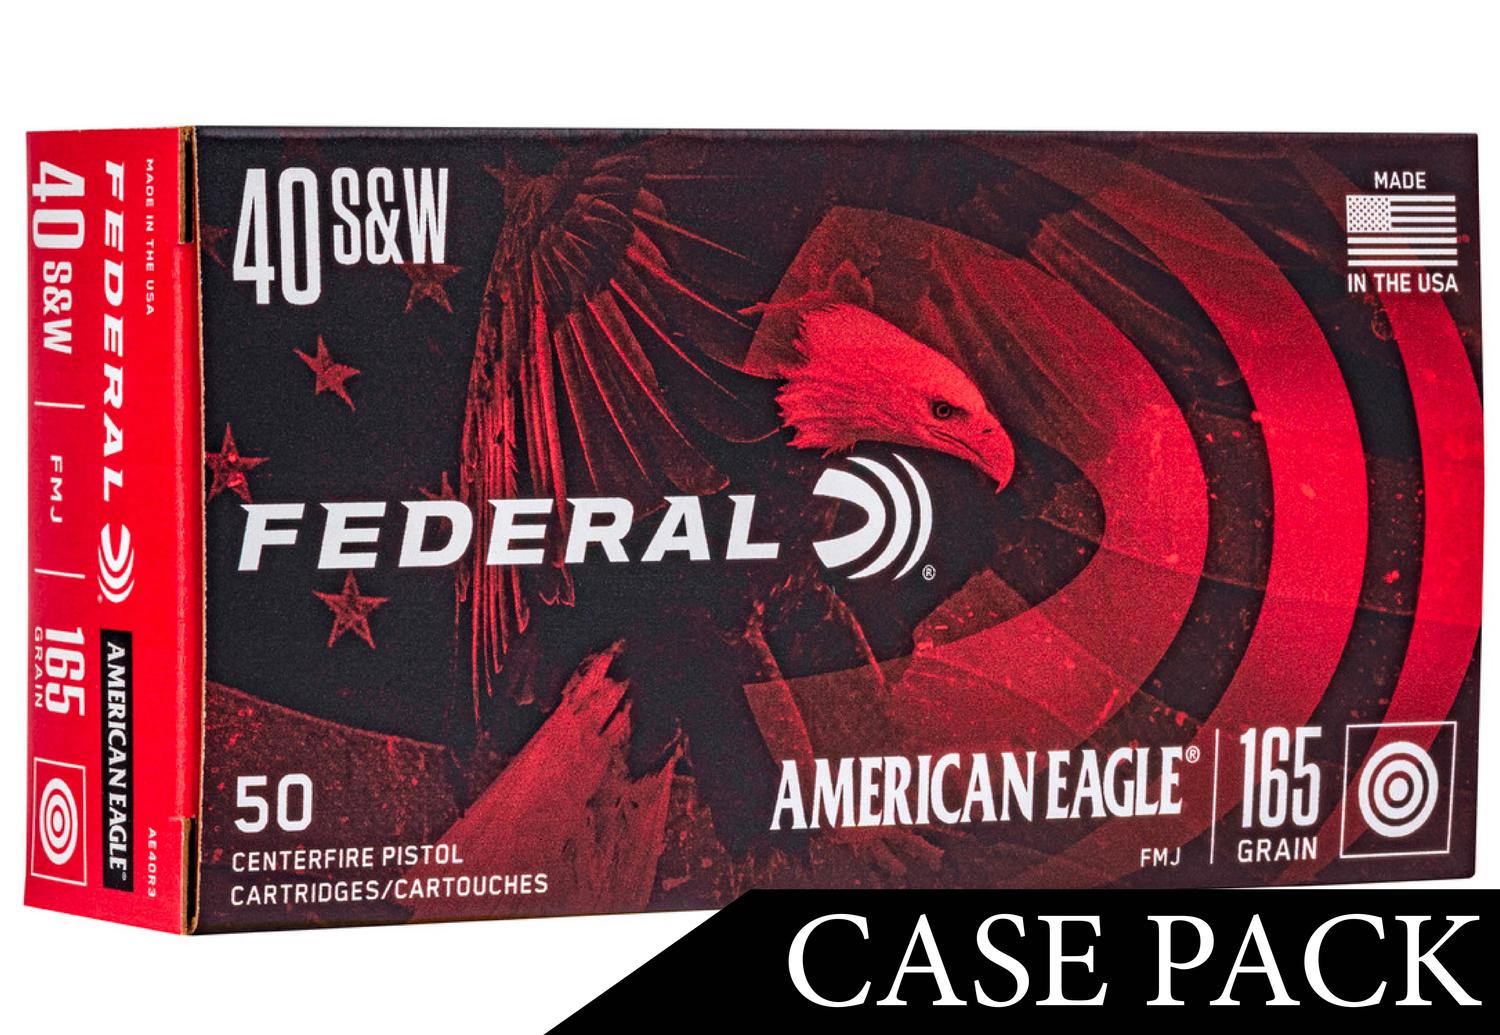  American Eagle 40s & W 165gr.Fmj 1000rd Case